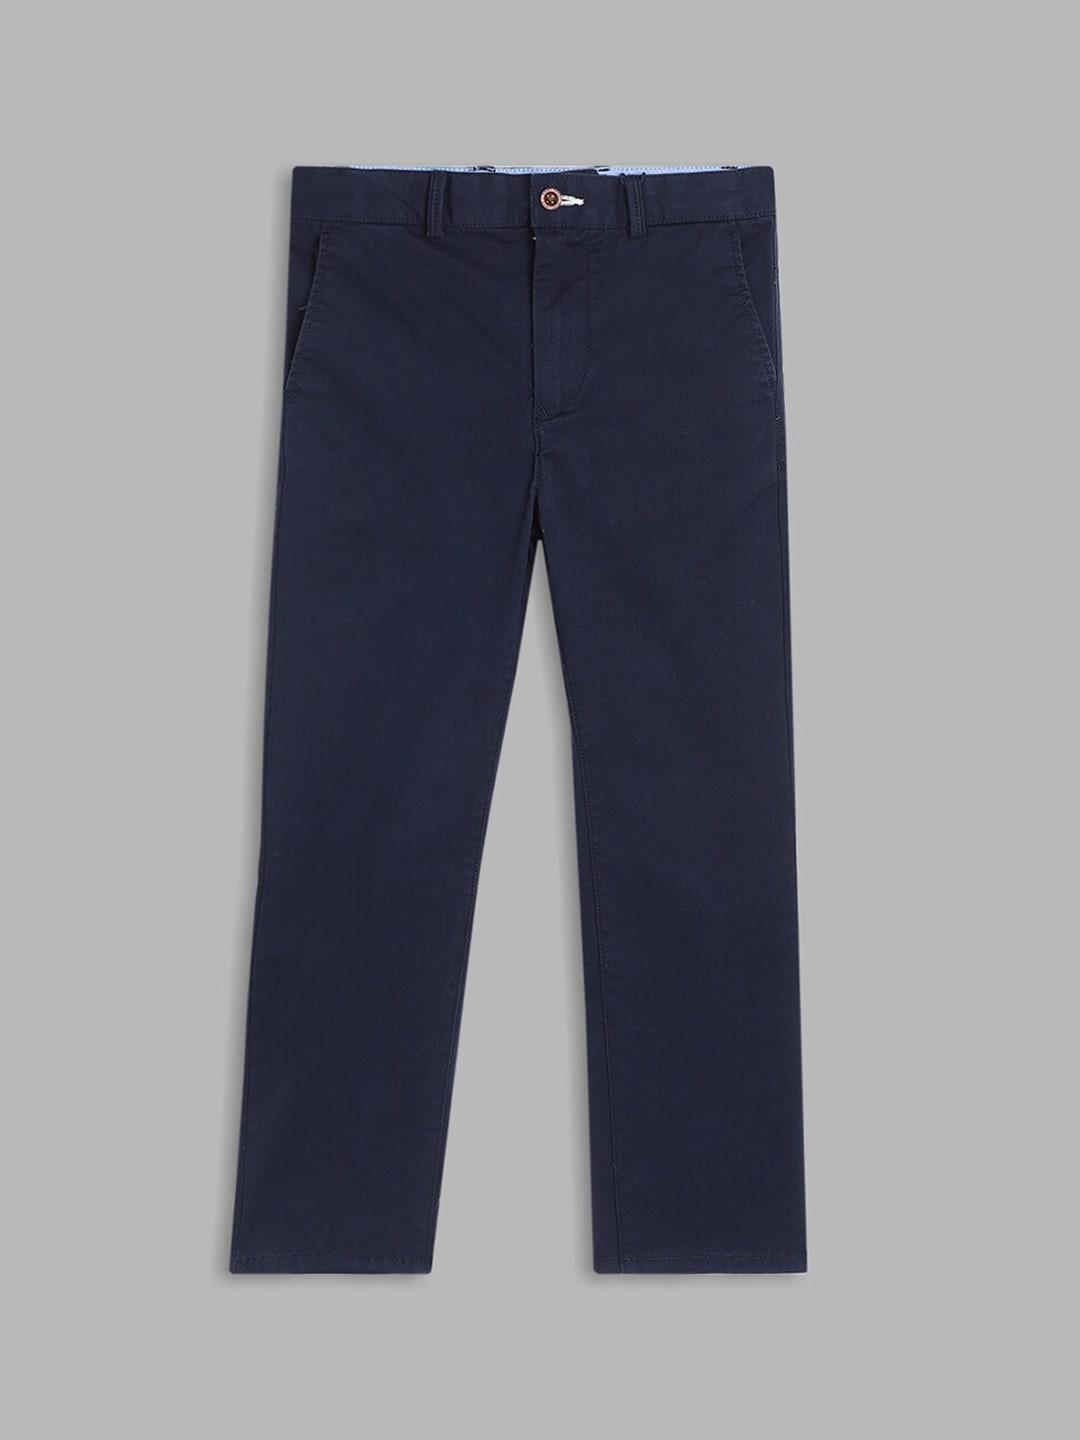 gant-boys-navy-blue-regular-fit-chinos-trouser